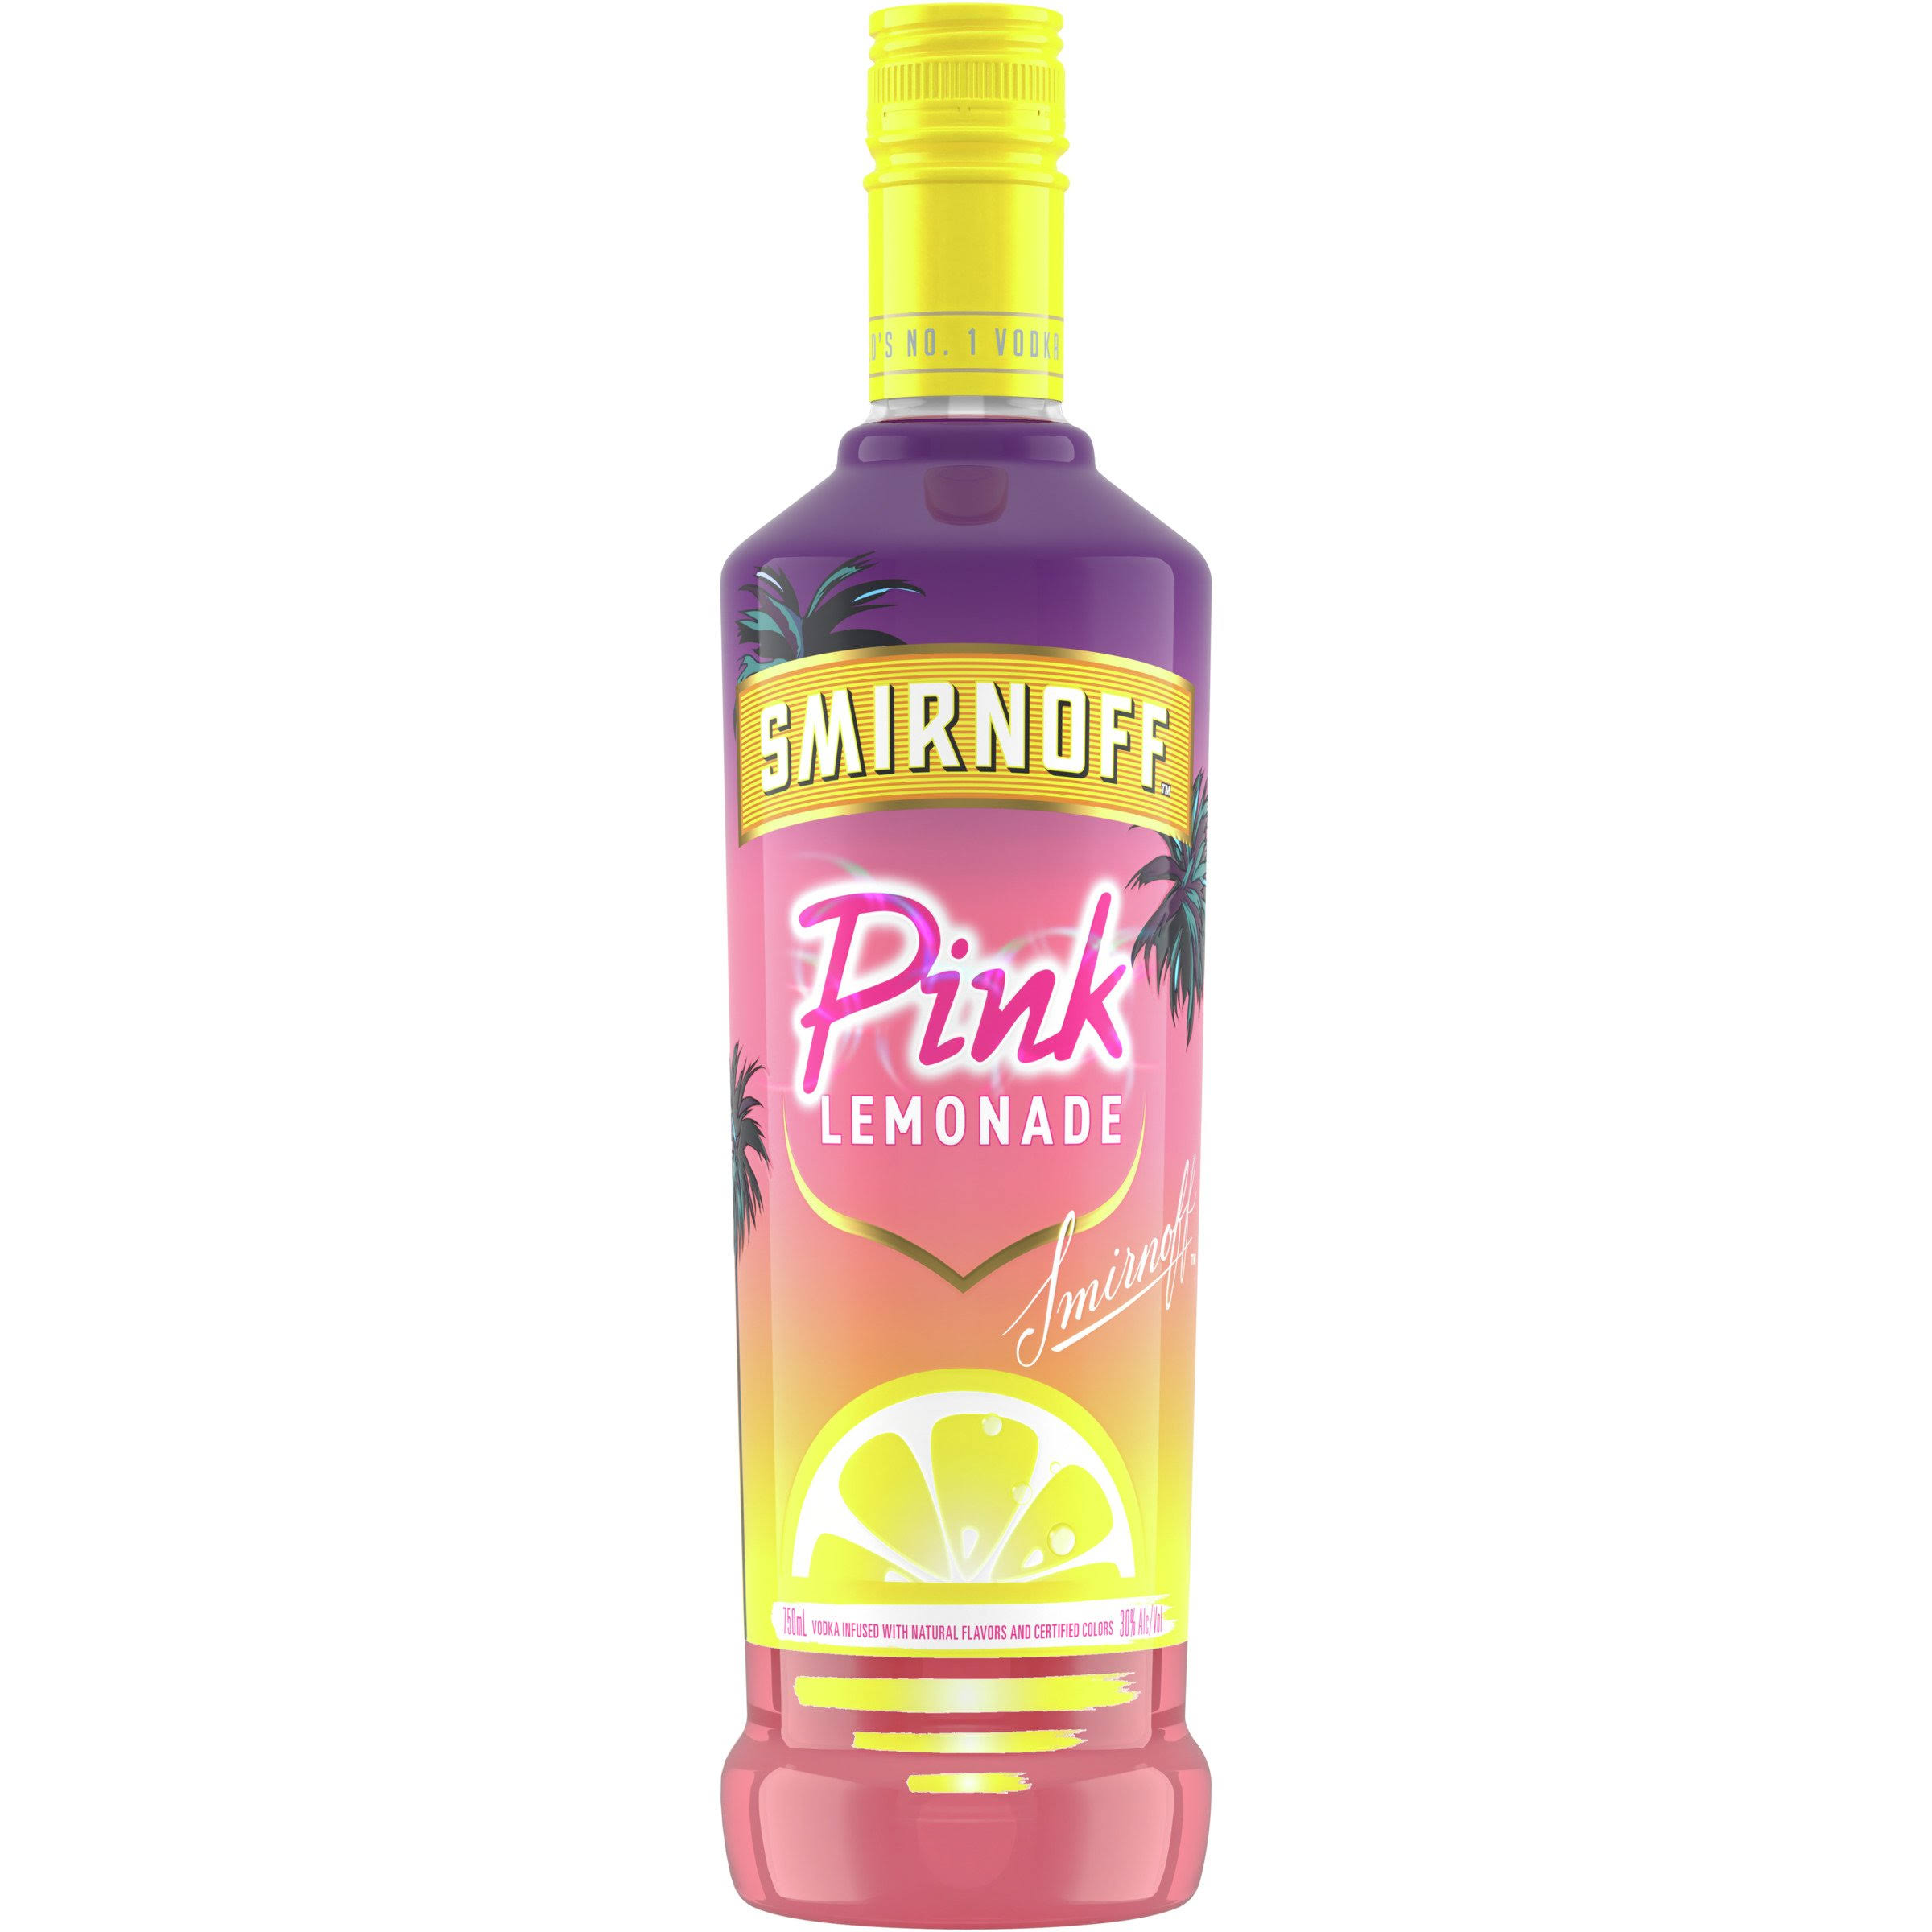 Smirnoff Vodka, Pink Lemonade - 750 ml